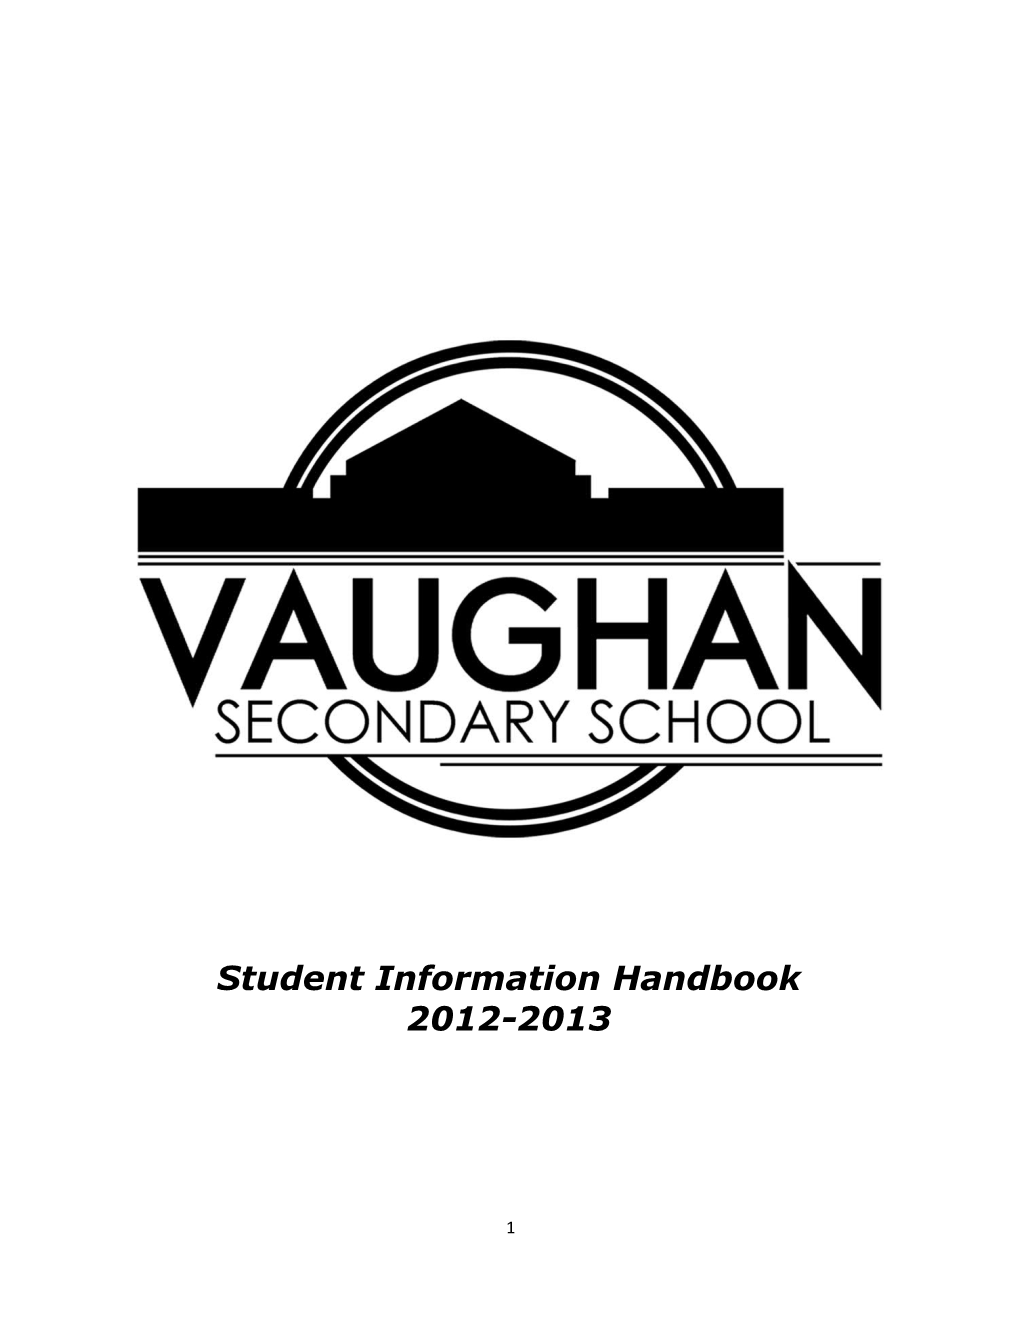 School Information Handbook 2012-13